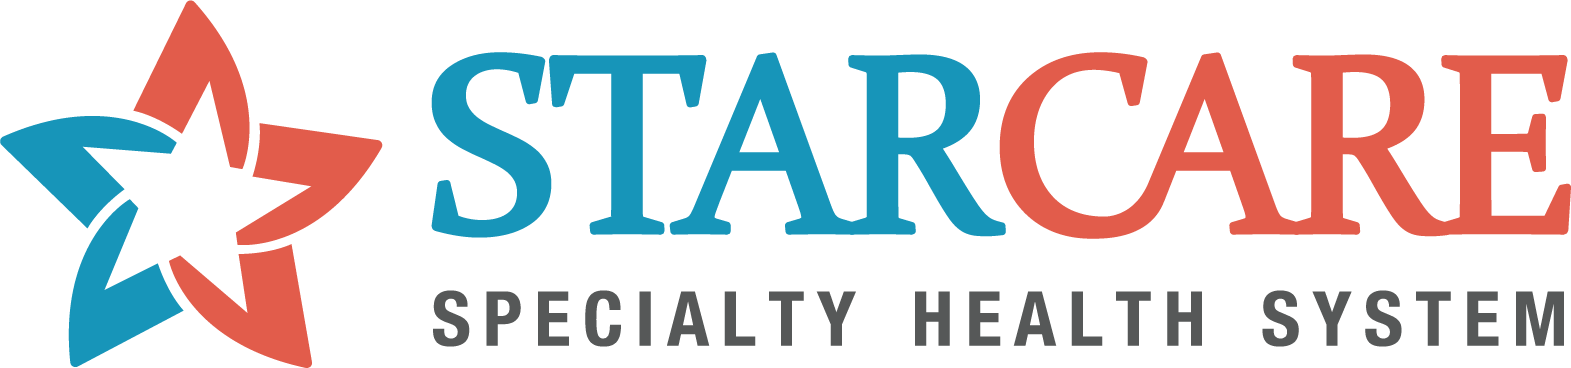 star care logo